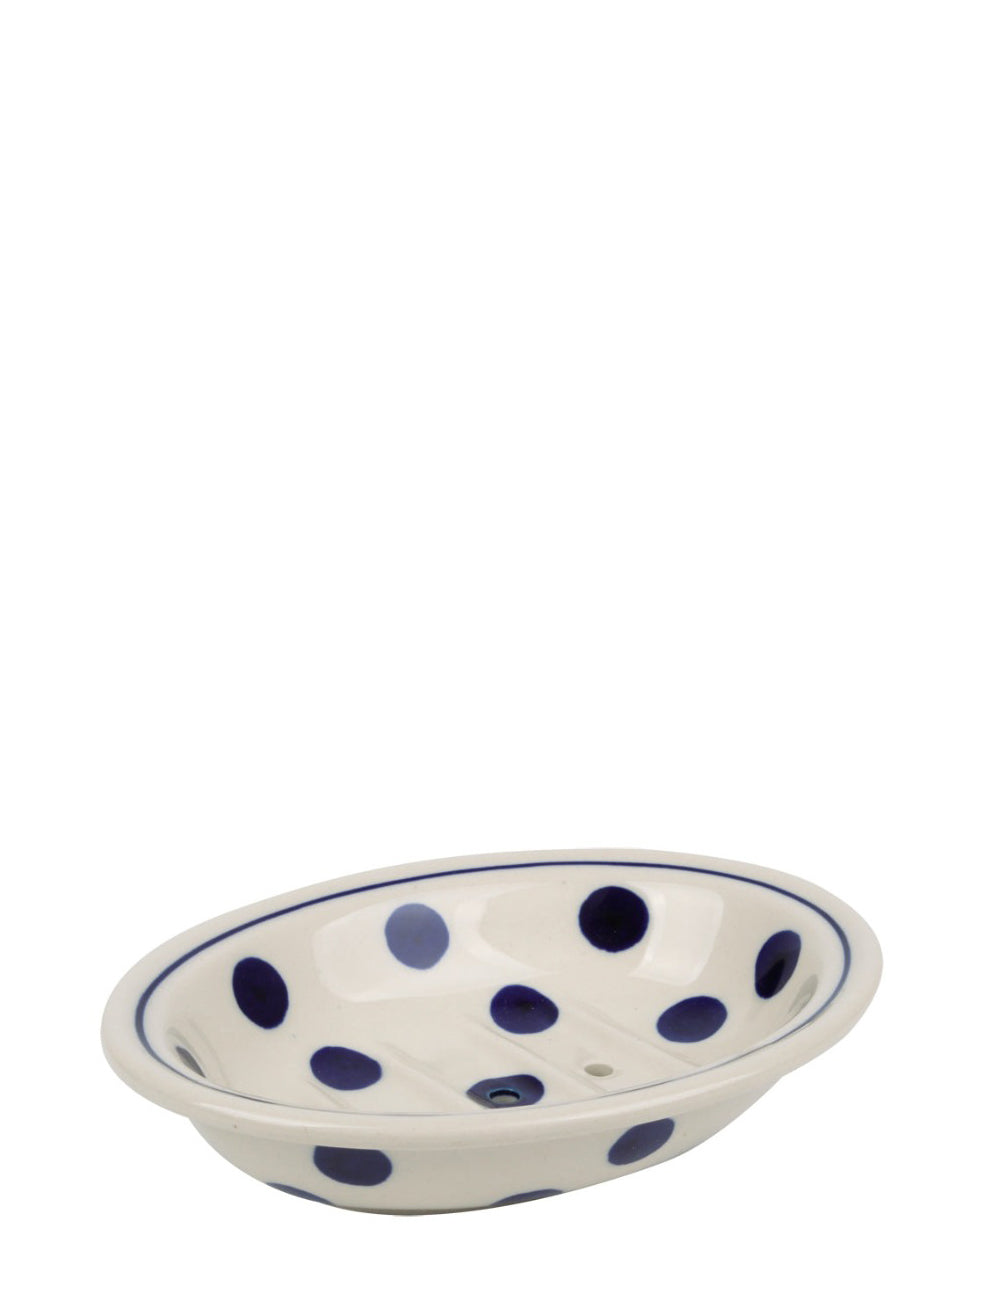 Ceramic soap dish, dots